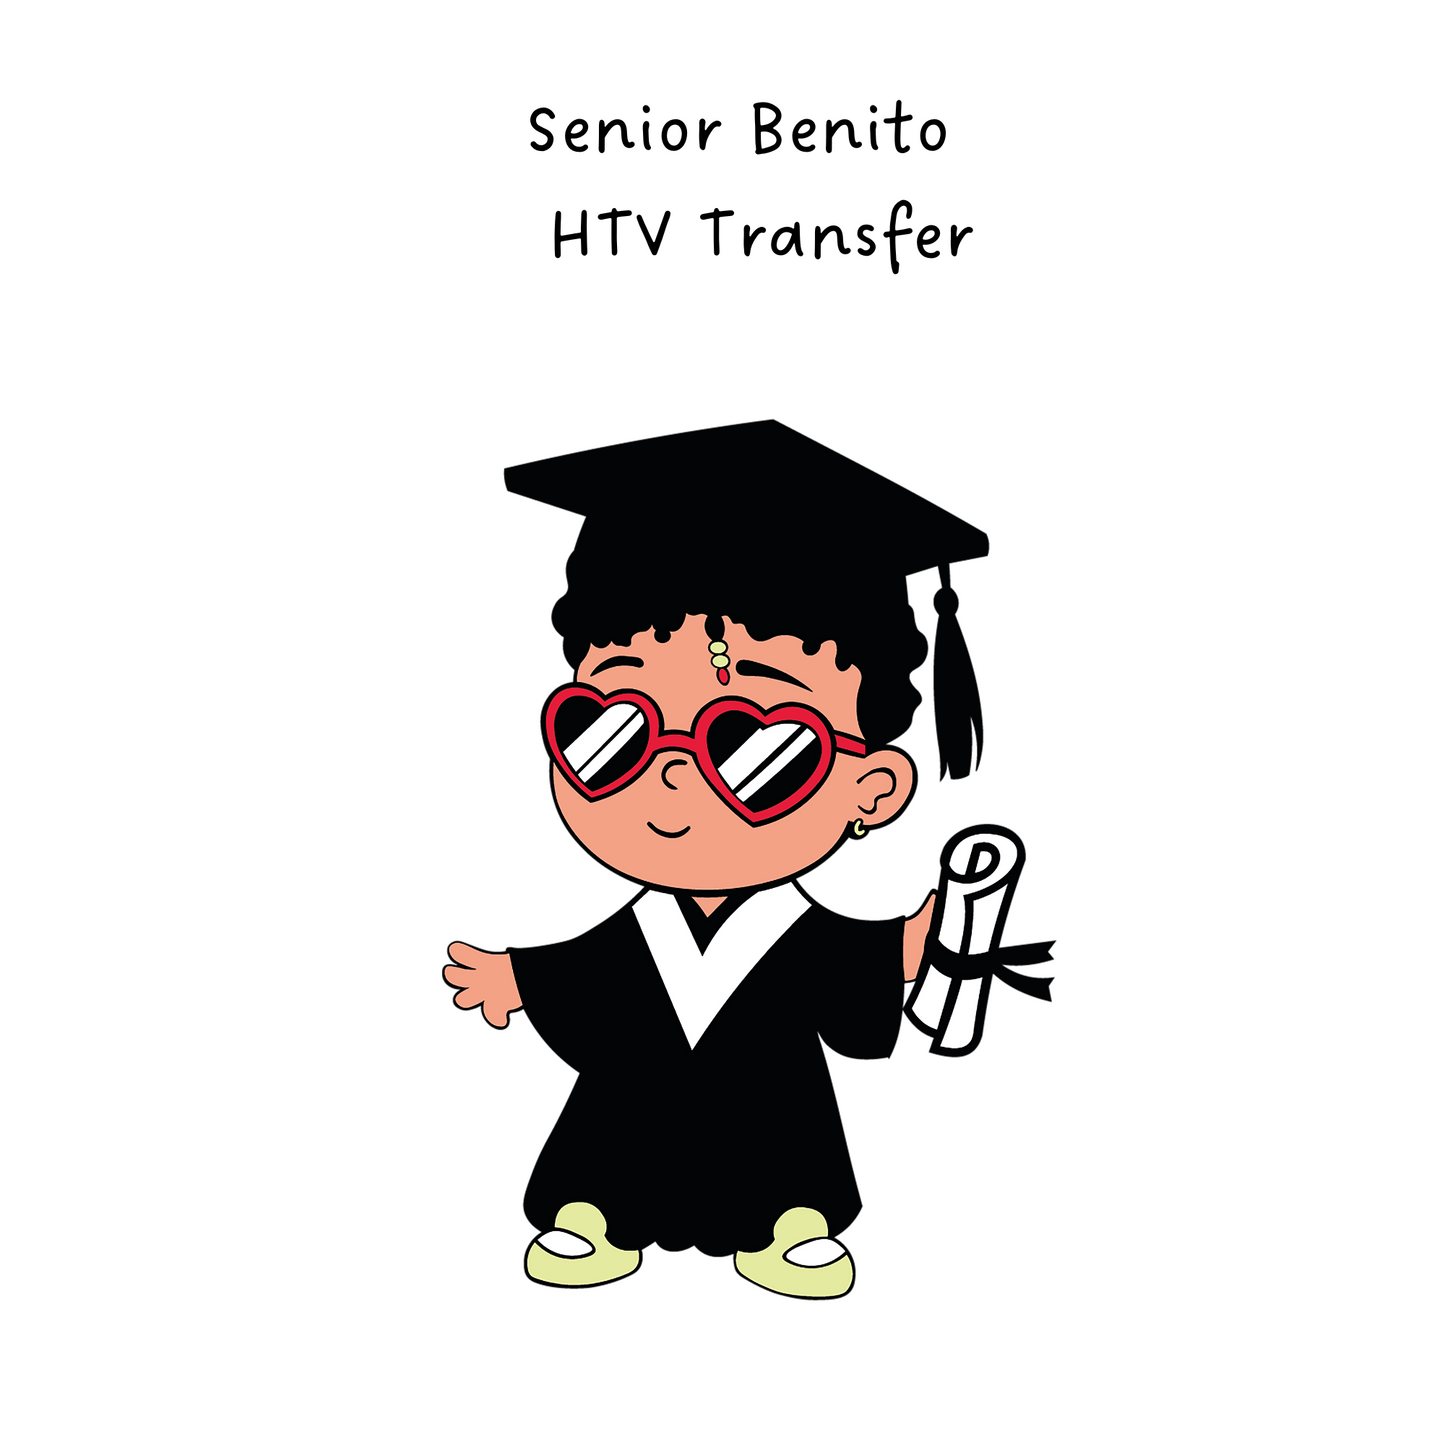 Senior Benito HTV Transfer